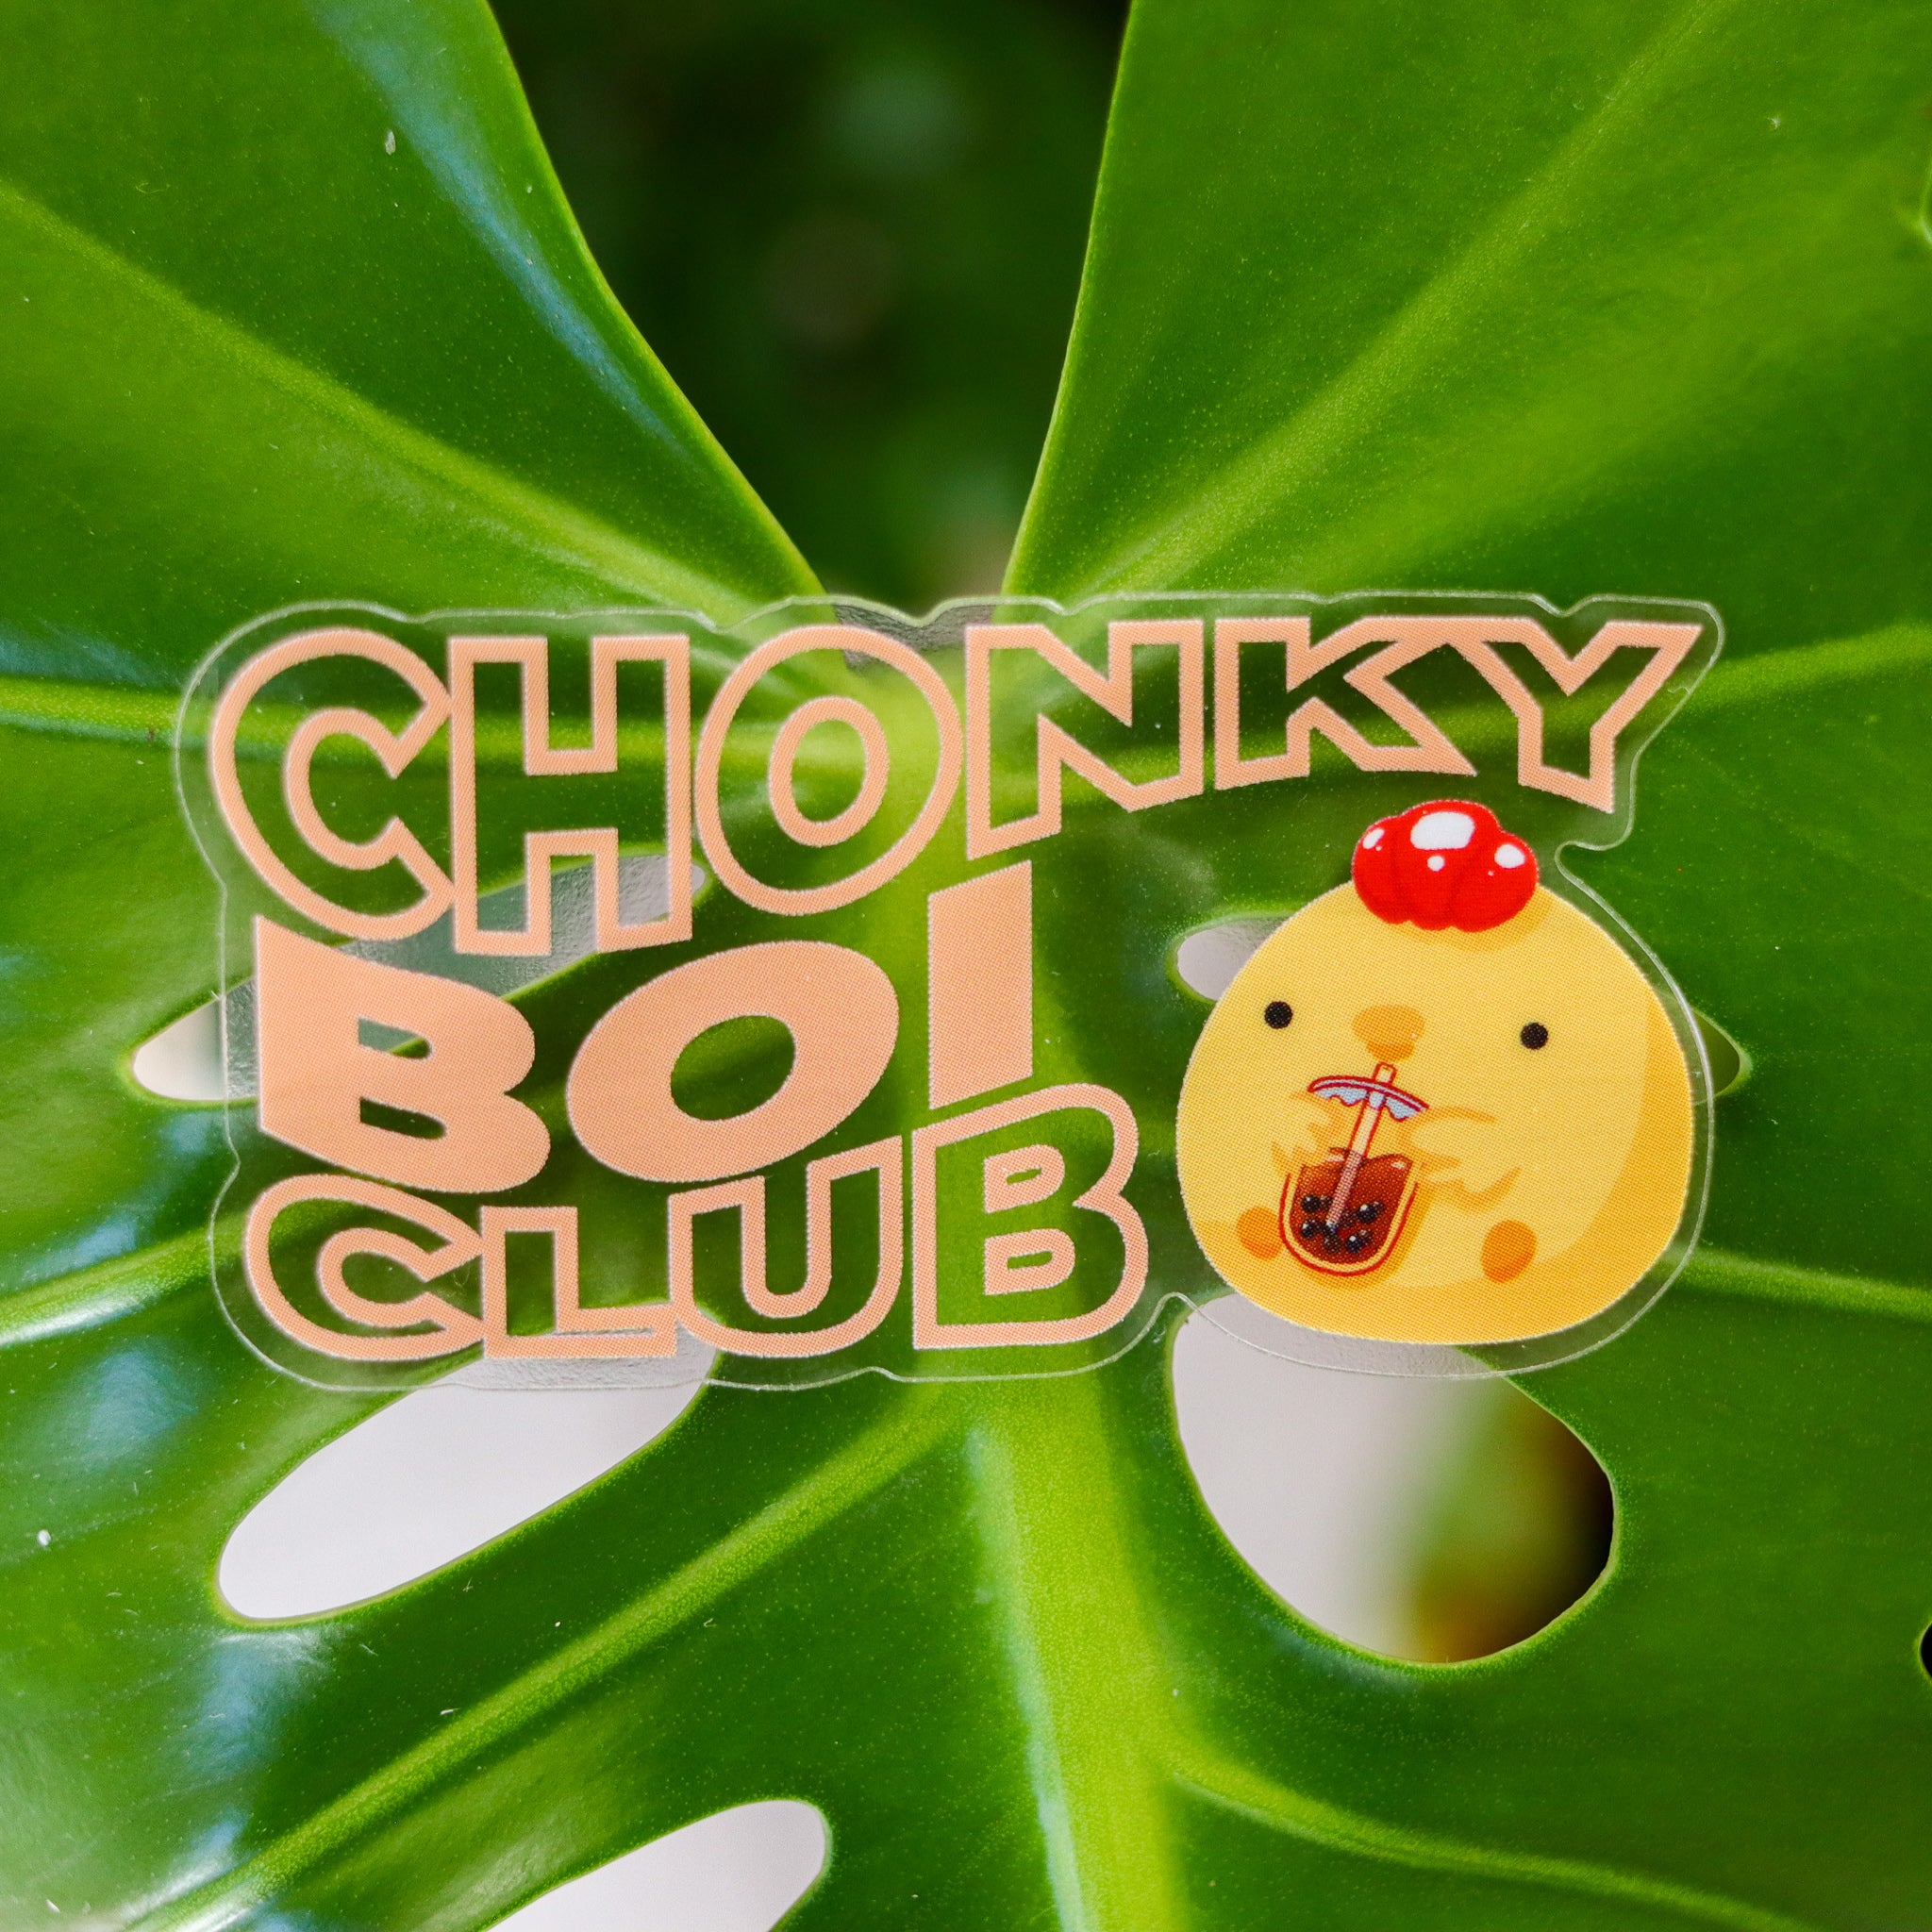 Clear Chonky Boi Club Sticker